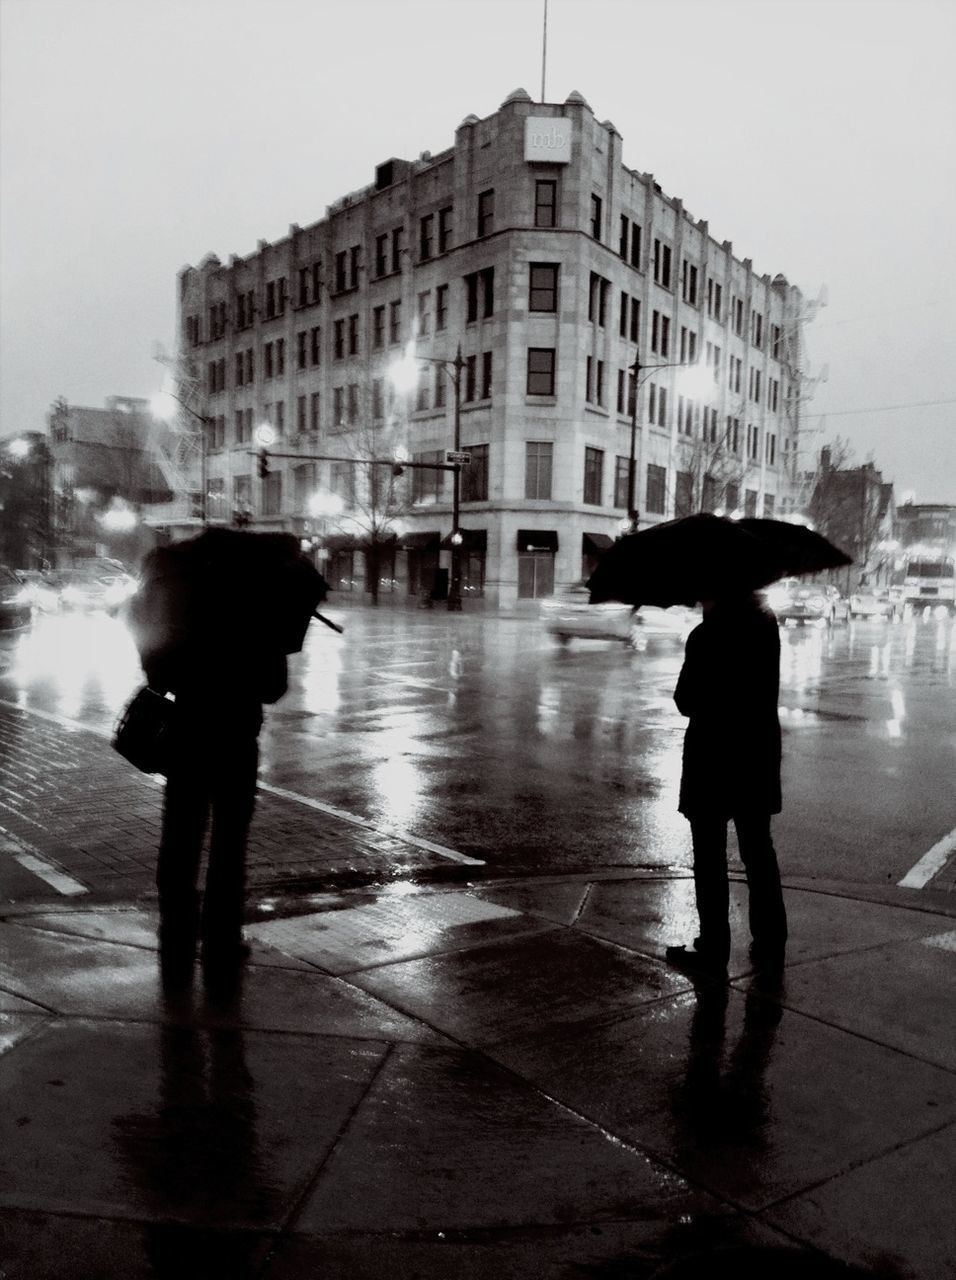 Silhouette people with umbrellas standing on sidewalk during rainy season